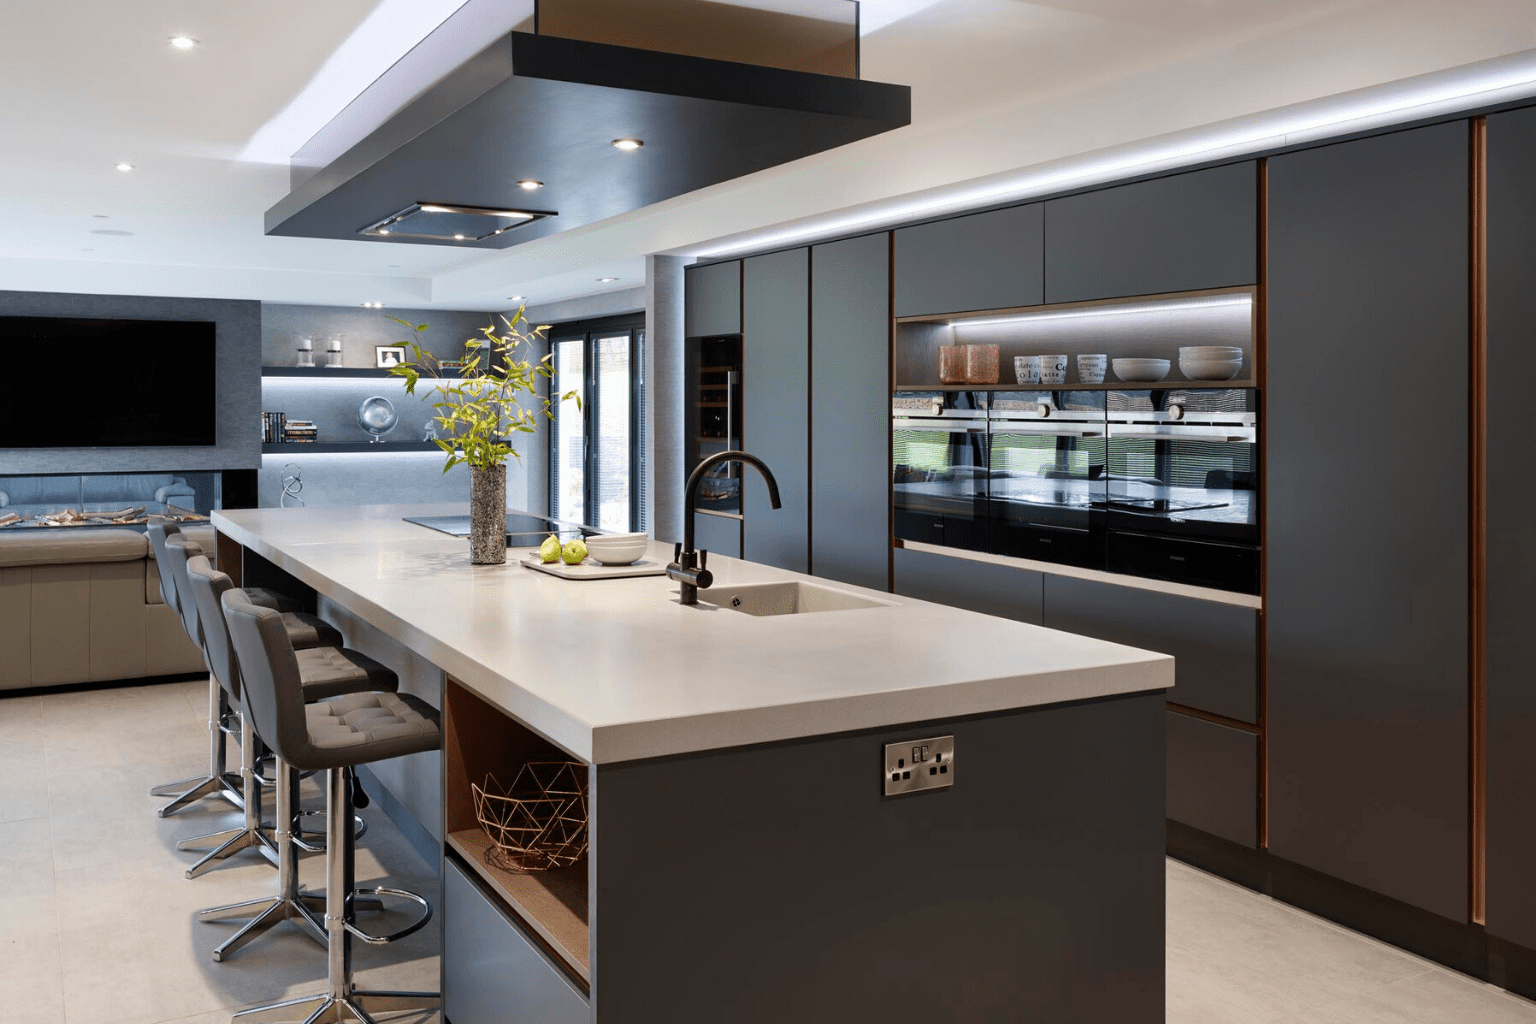 Luxury Kitchens Colchester | Colchester Kitchens & Bathrooms